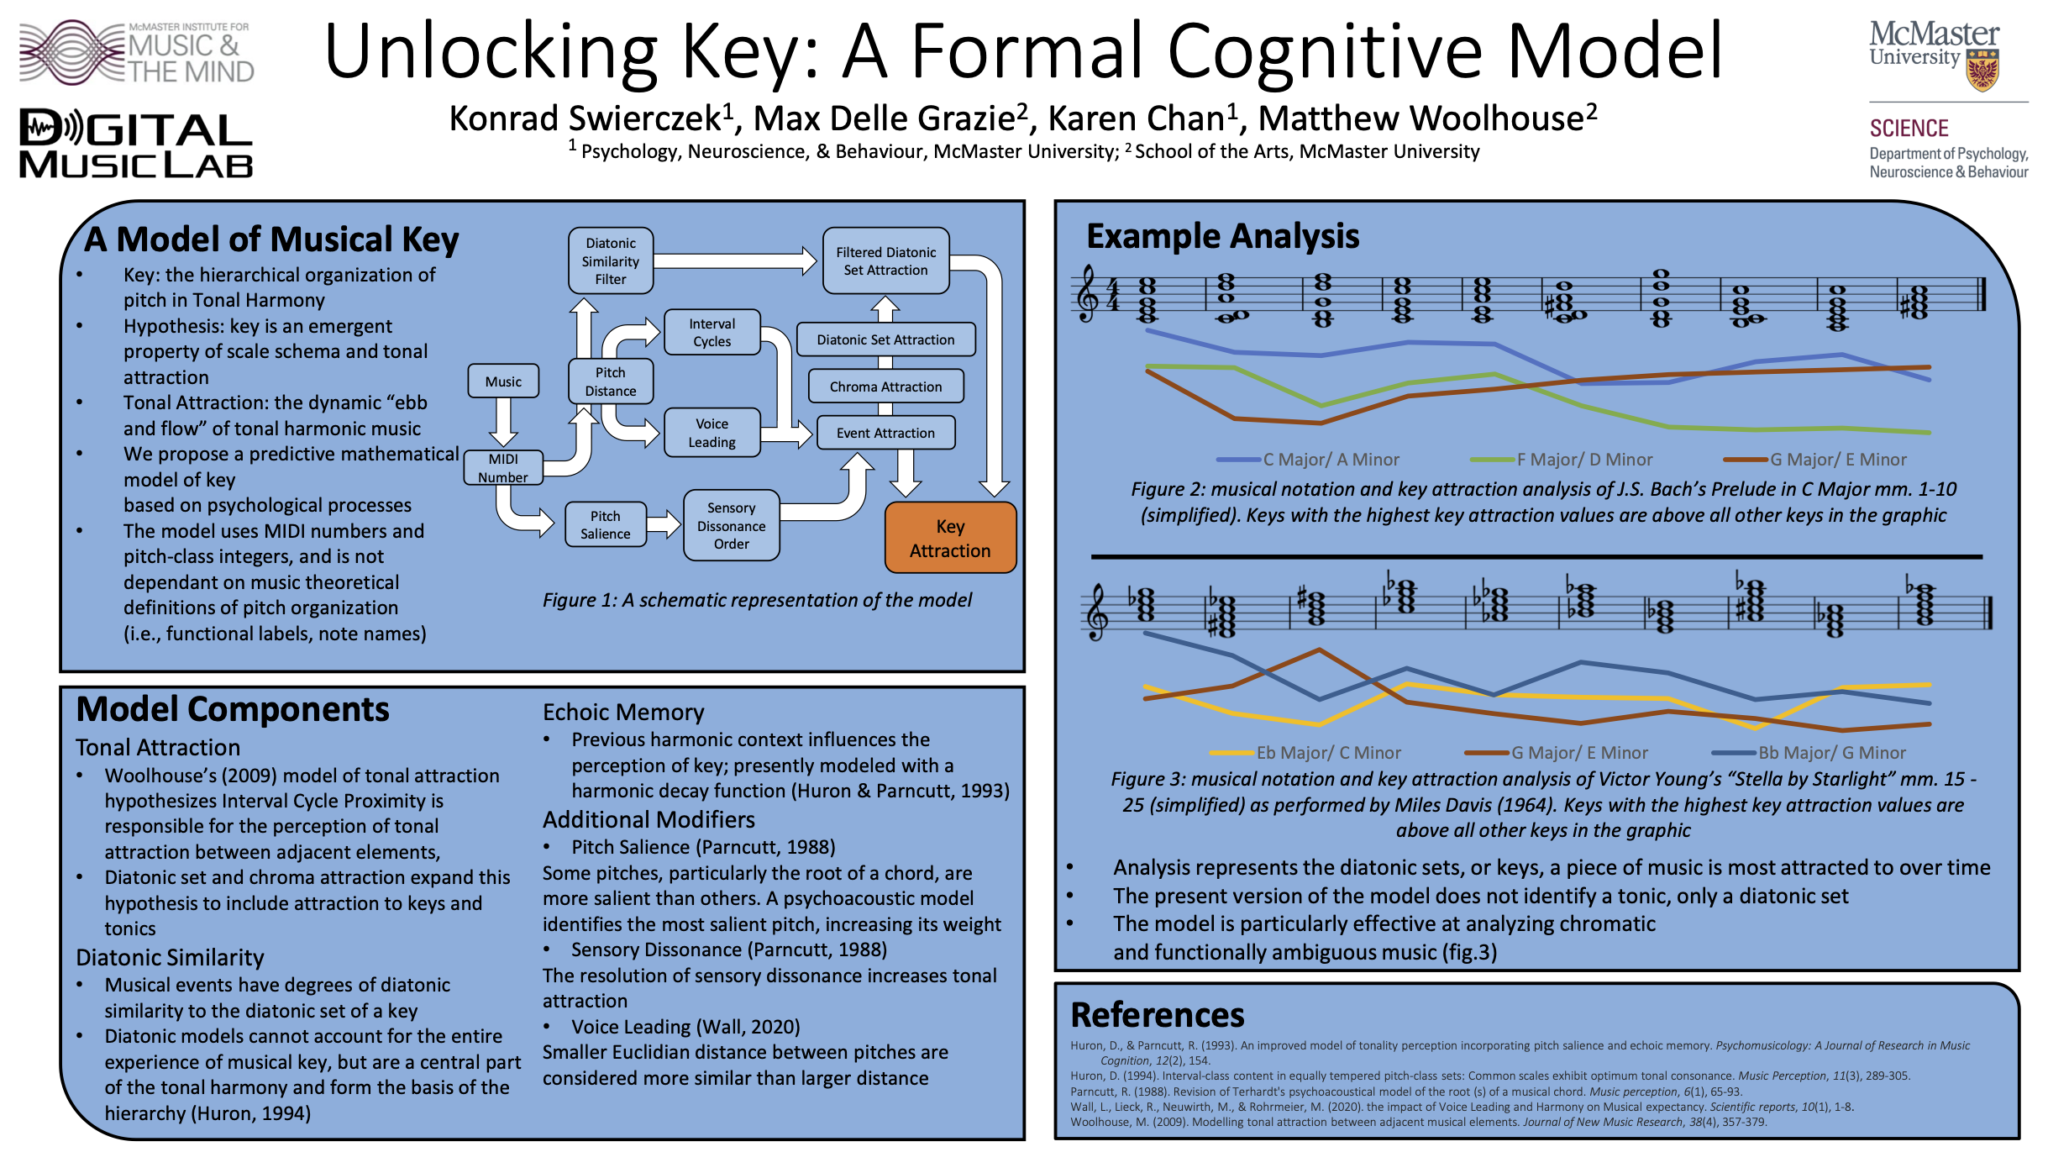 The poster for: Unlocking Key: A Formal Cognitive Model" by Konrad Swierczek, Max Delle Grazie, Karen Chan, and Matthew Woolhouse.